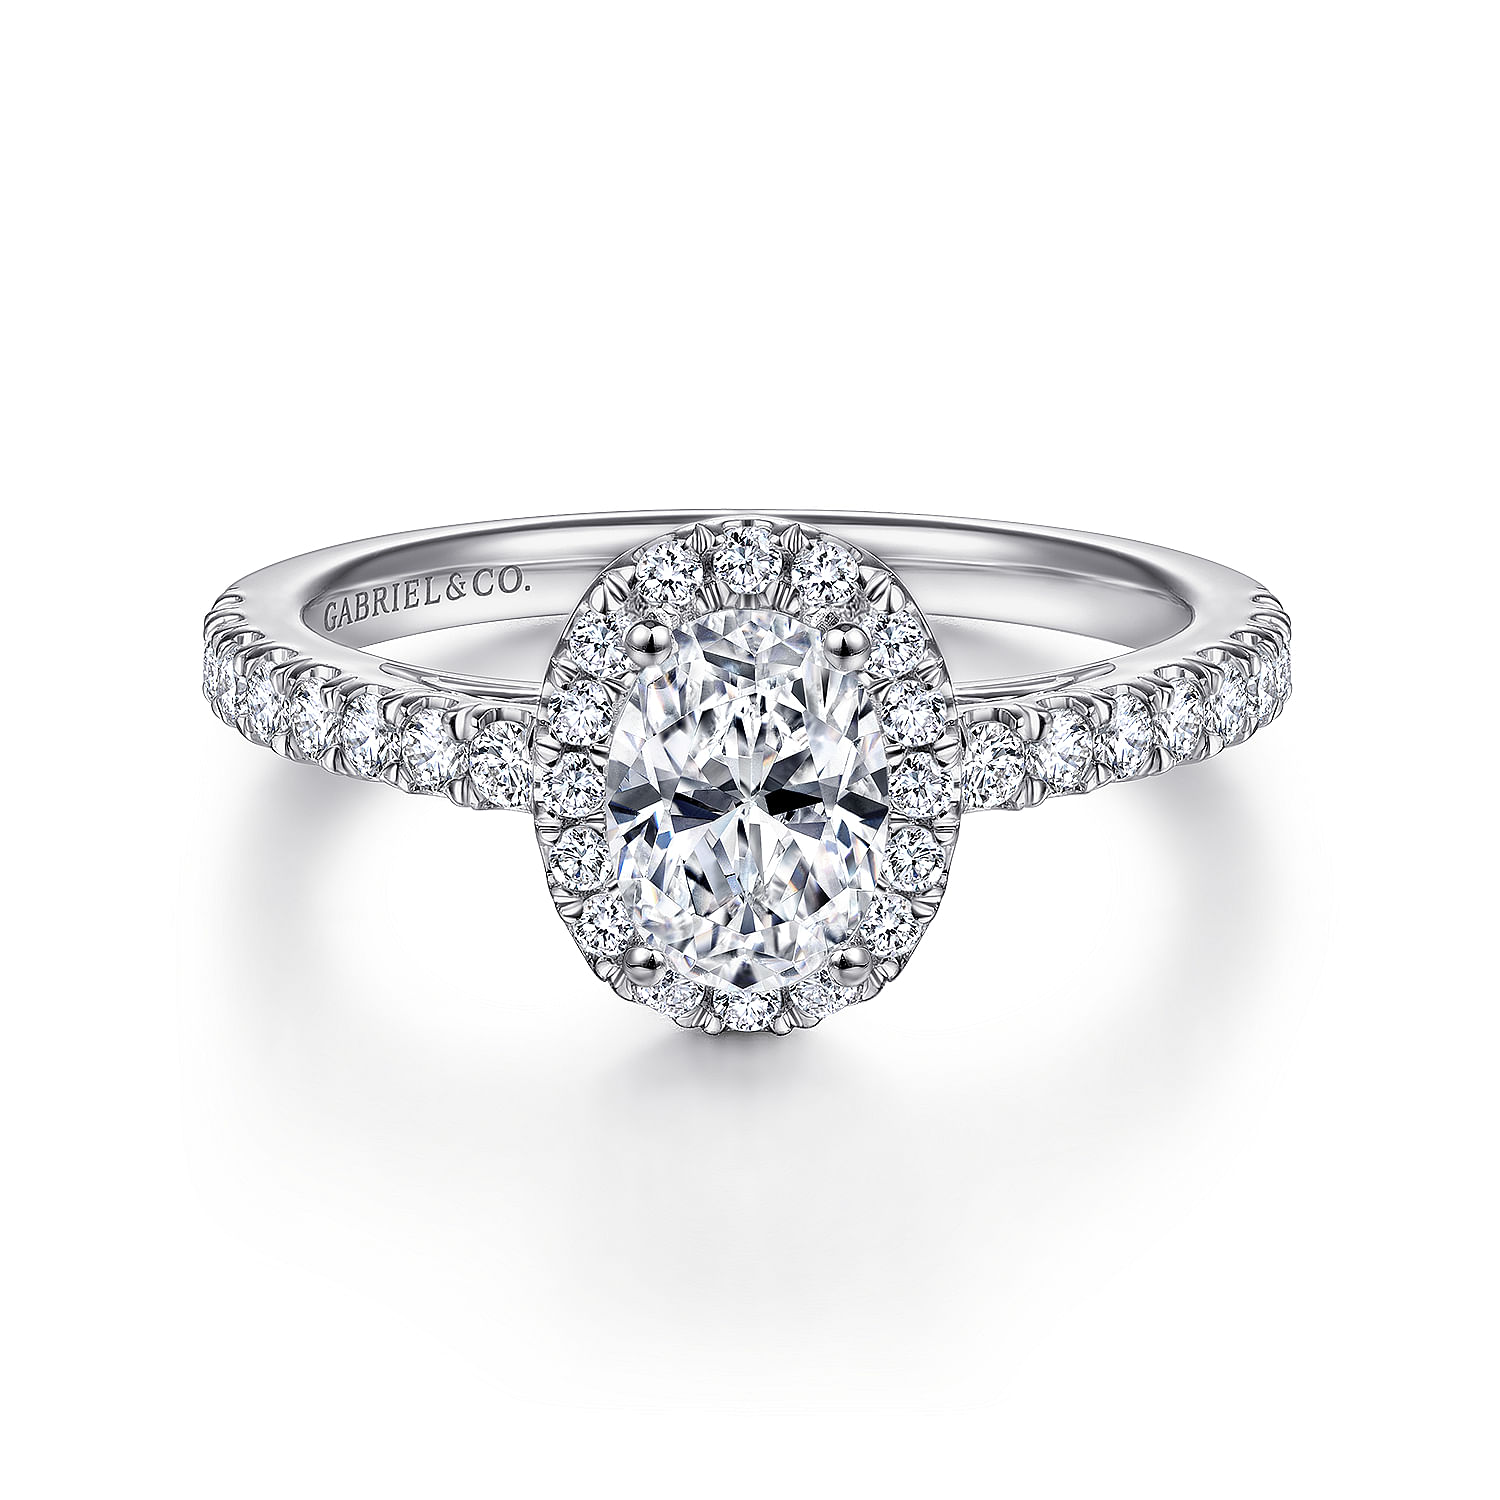 Gabriel - 14K White Gold Oval Halo Diamond Engagement Ring